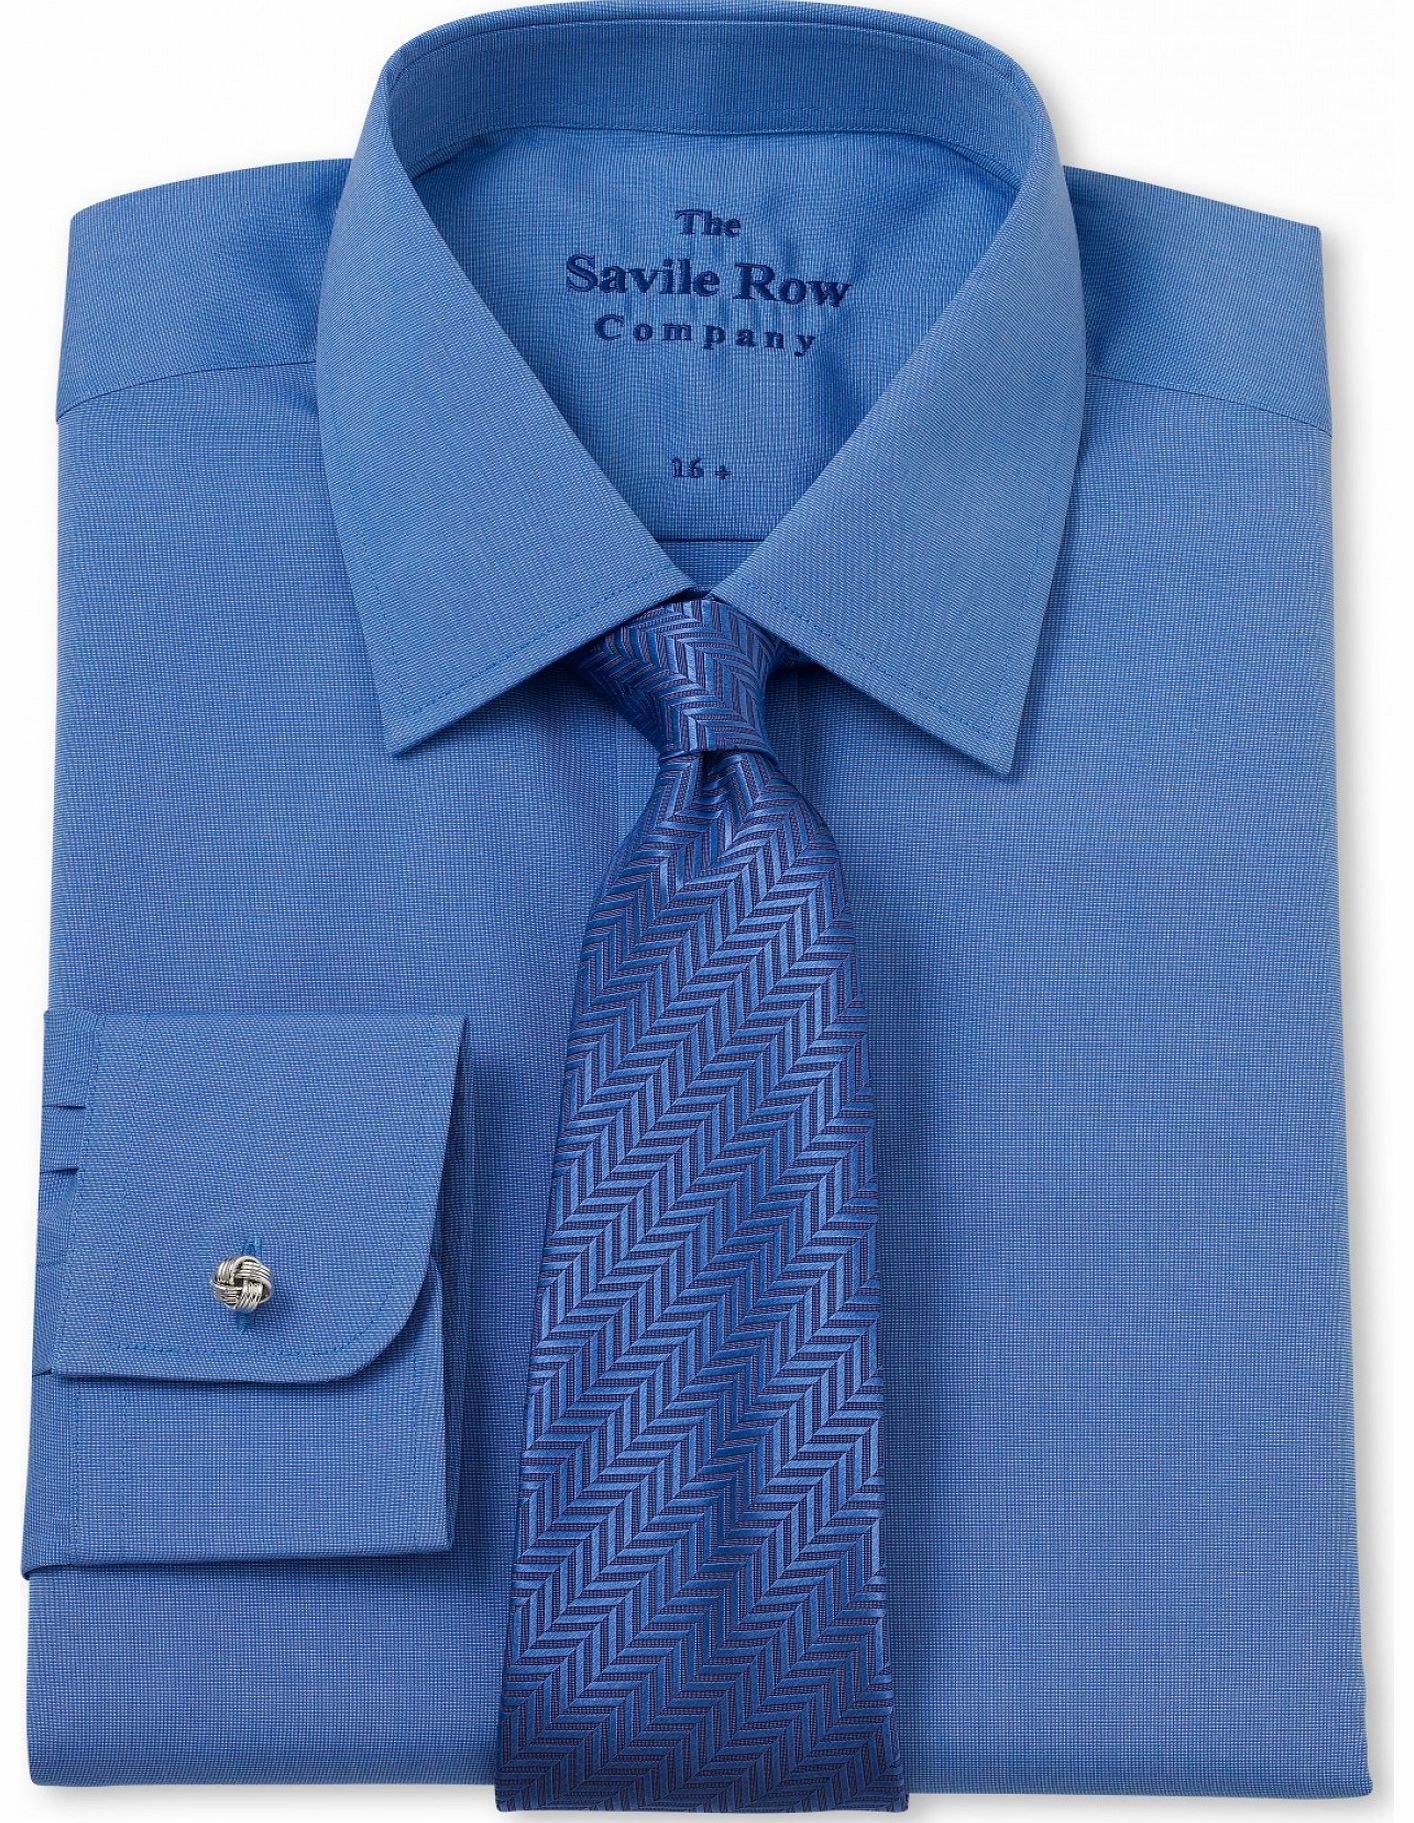 Savile Row Company Blue End on End Slim Fit Shirt 16 1/2`` Standard